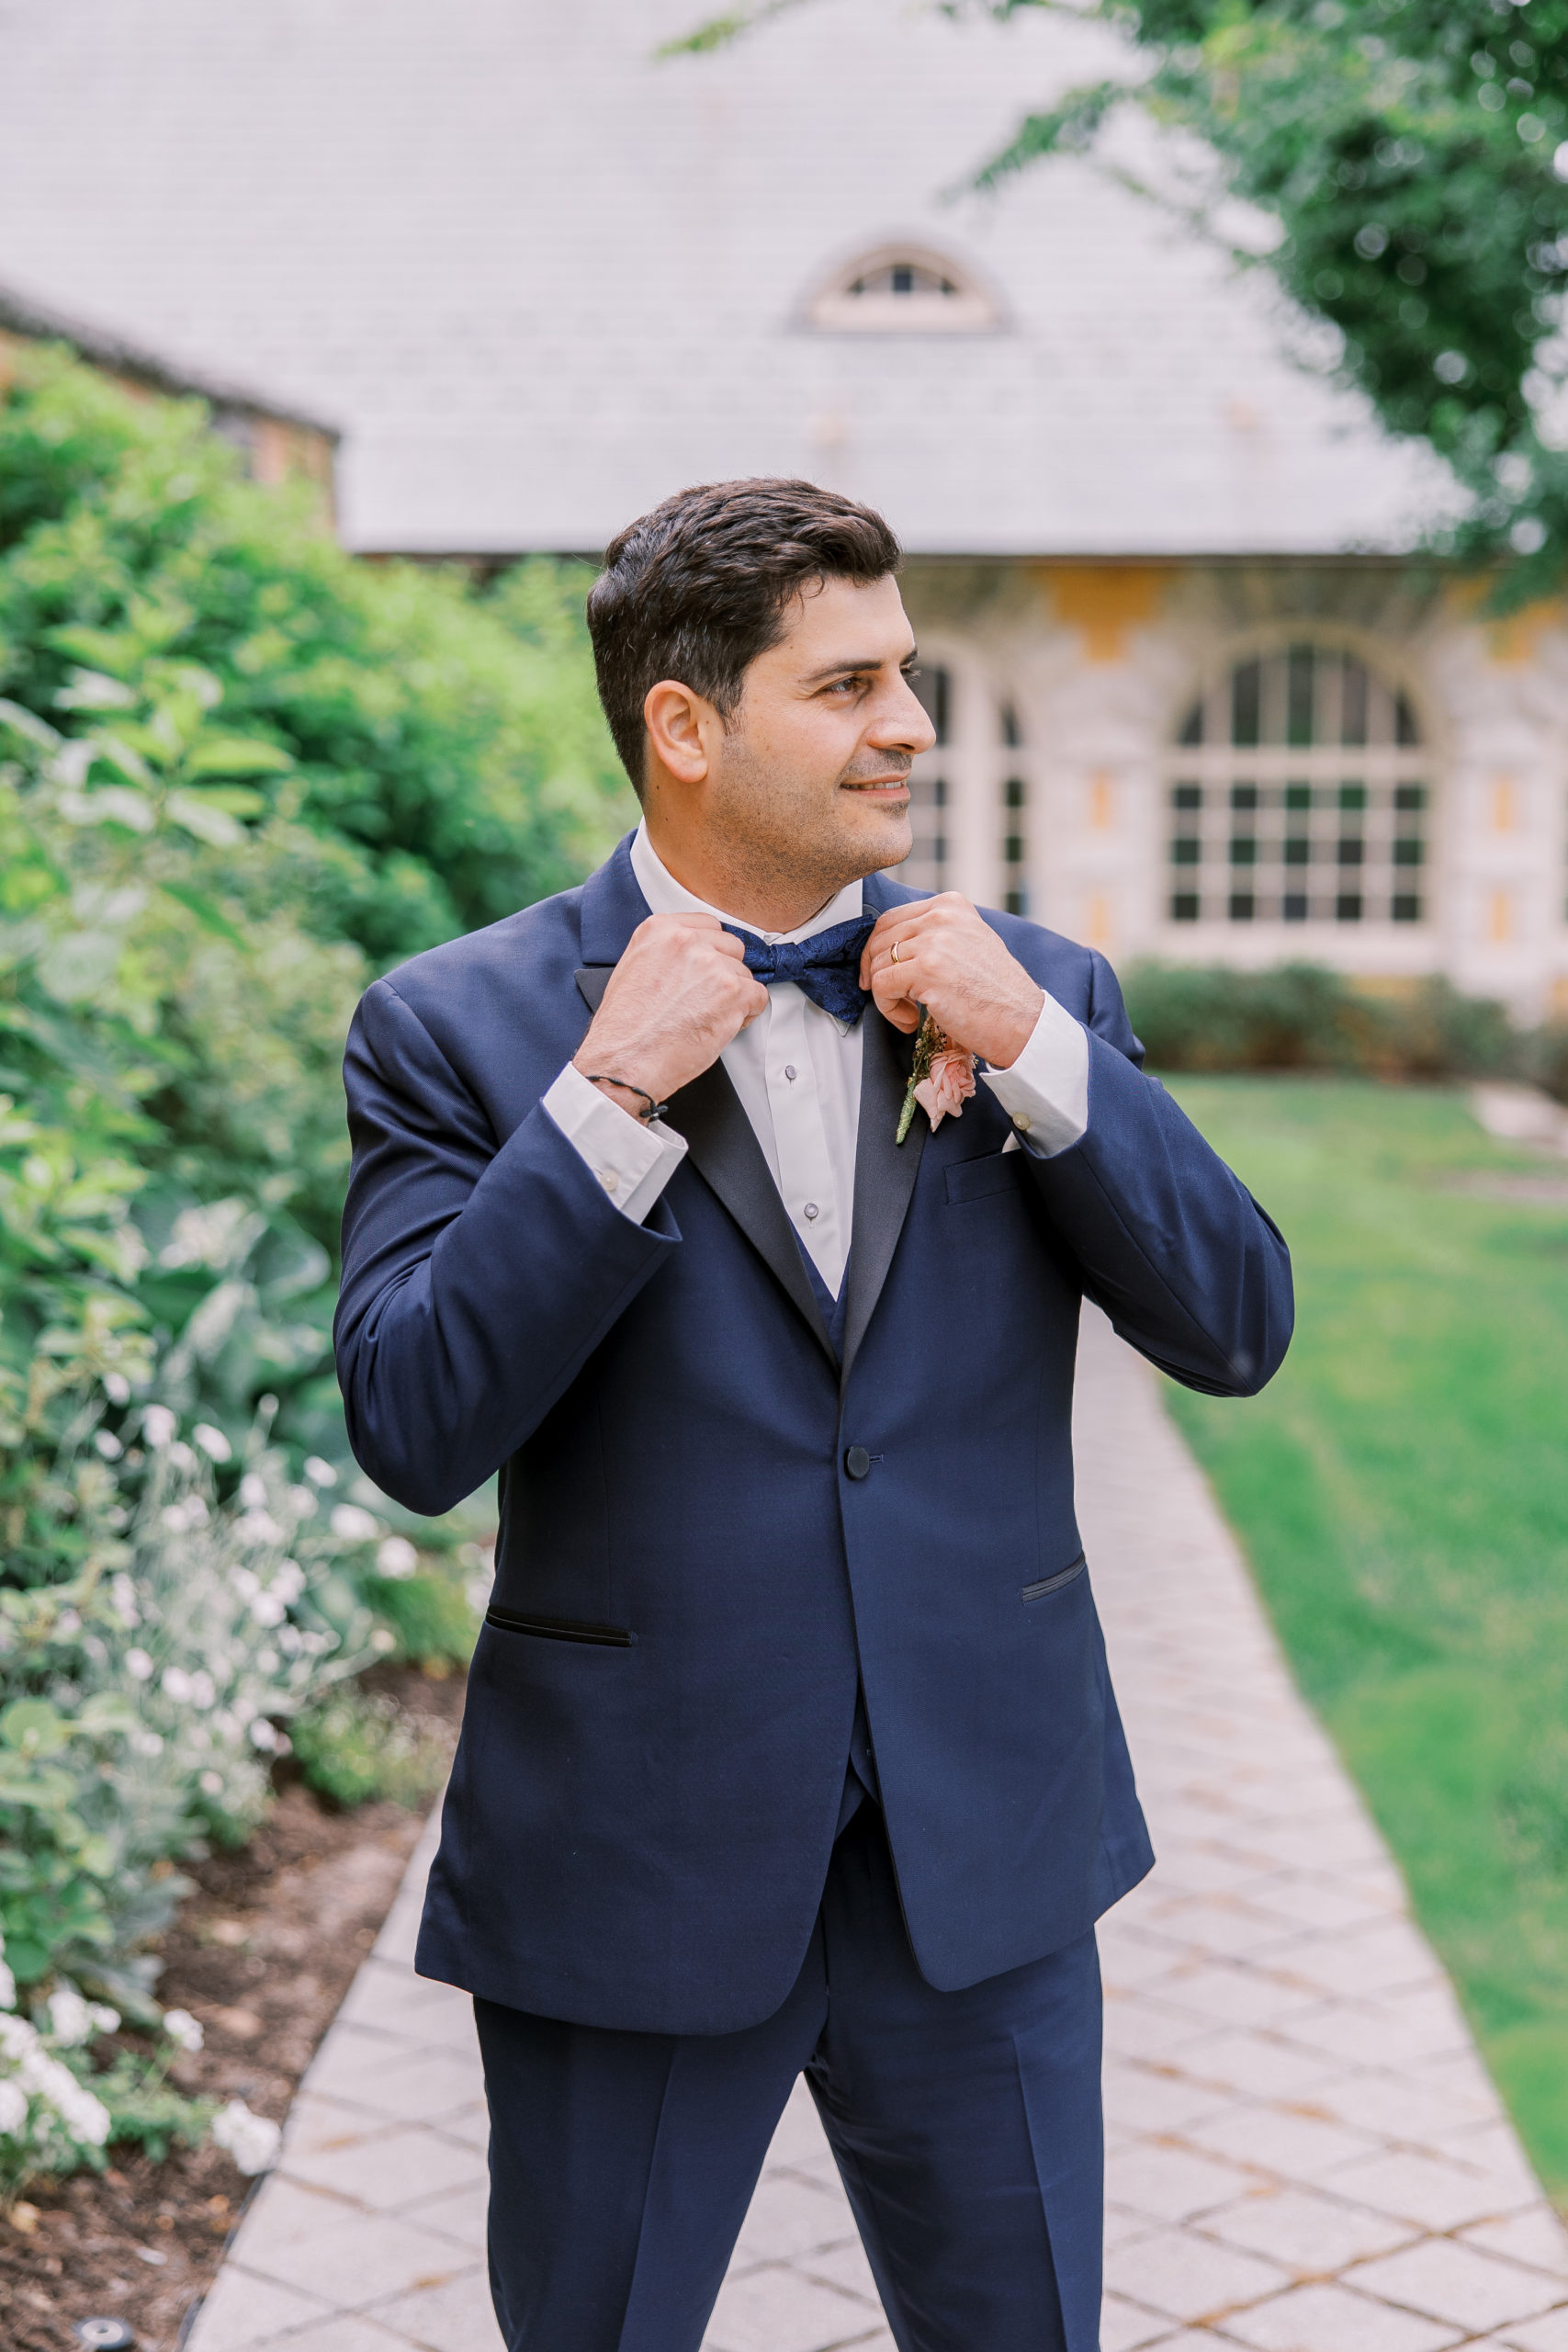 Groom adjusts his tie wearing a navy suit in garden for Cairnwood Estate Wedding Photography